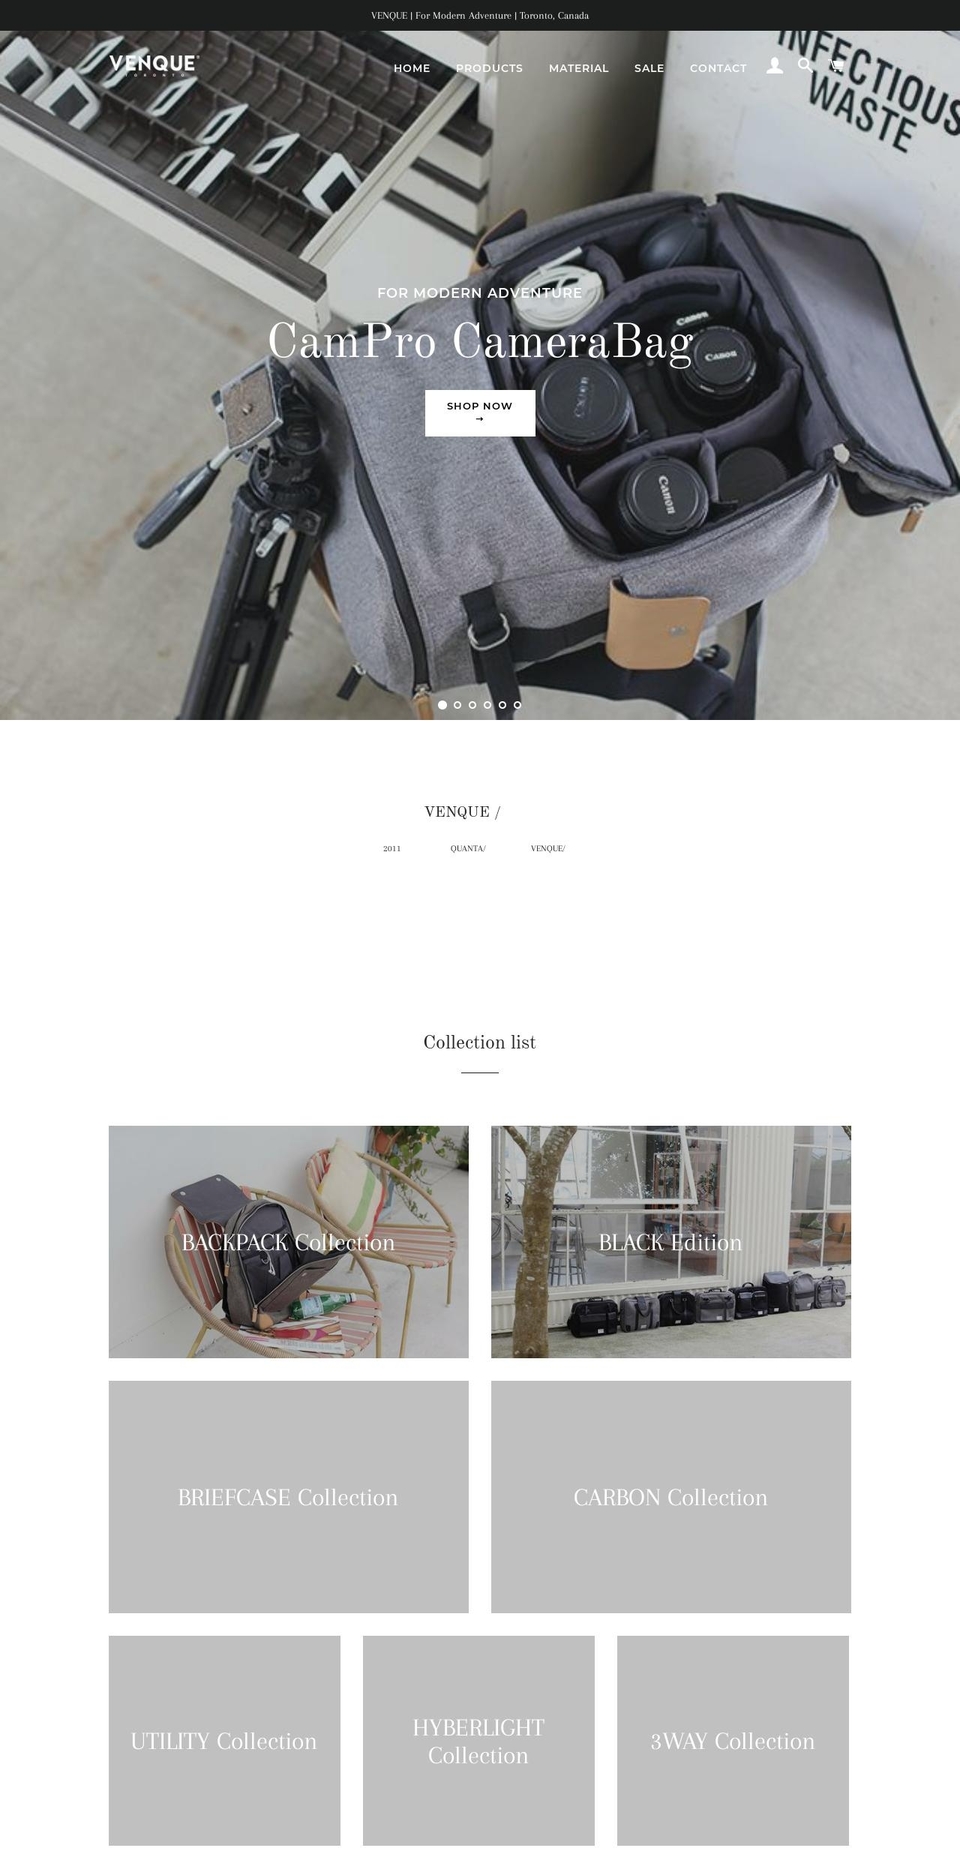 venque.jp shopify website screenshot